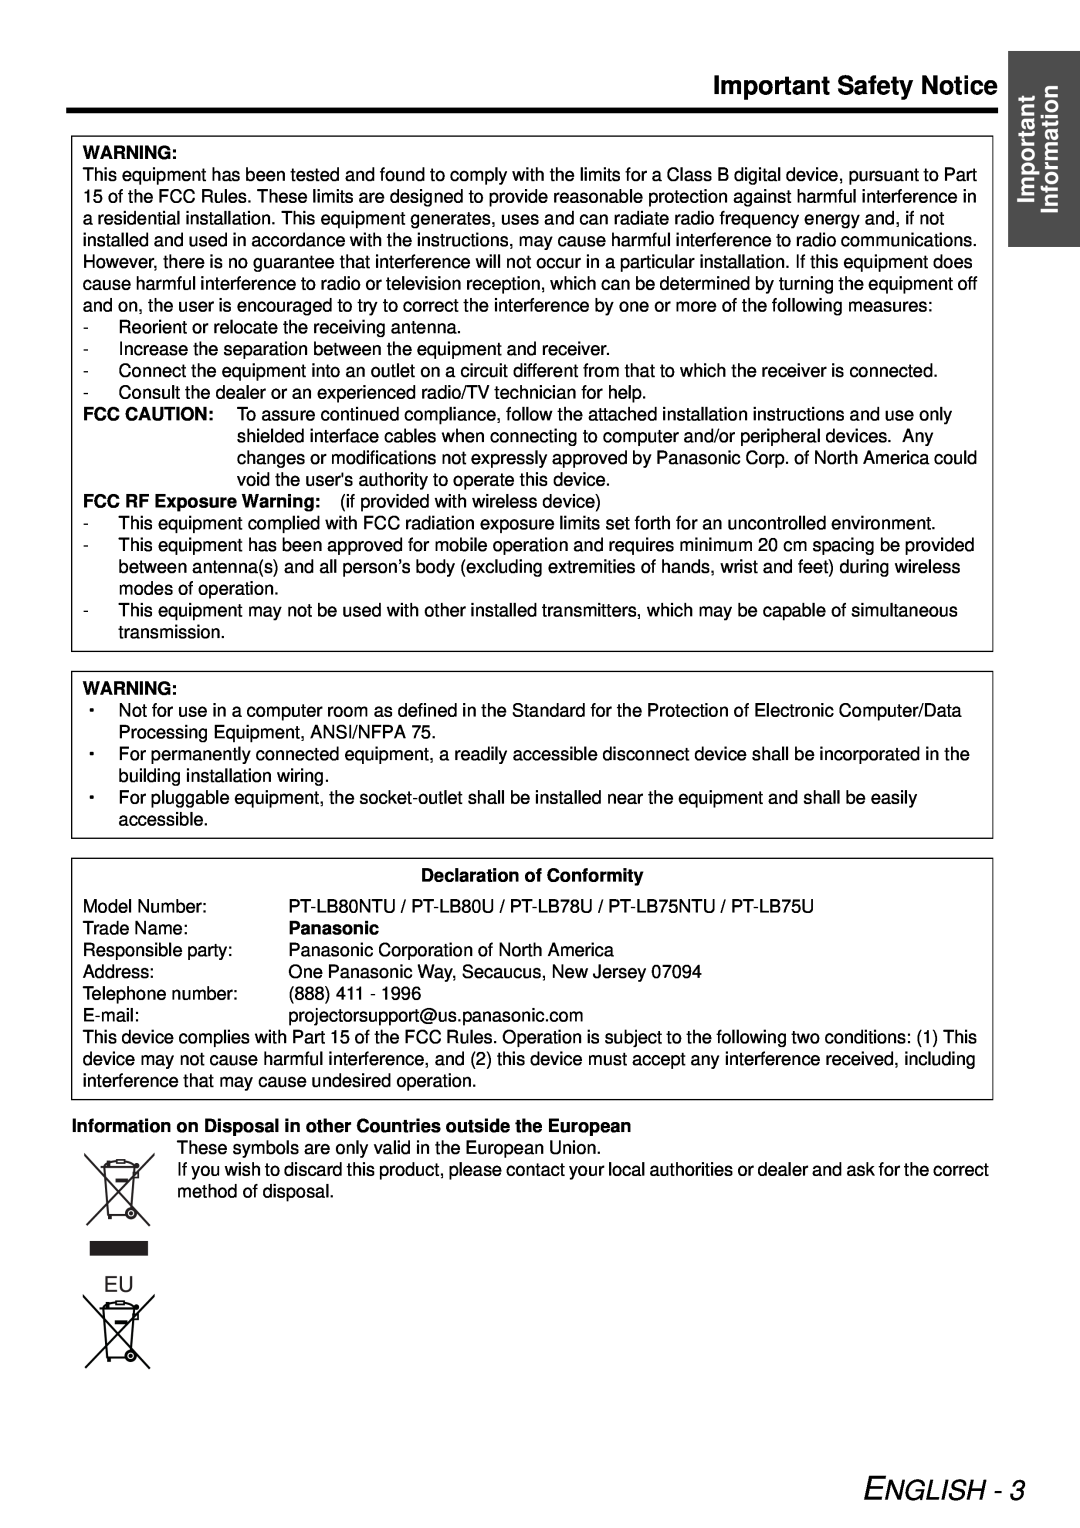 Panasonic PT-LB78U manual Important Safety Notice, English, Important Information, Declaration of Conformity, Panasonic 